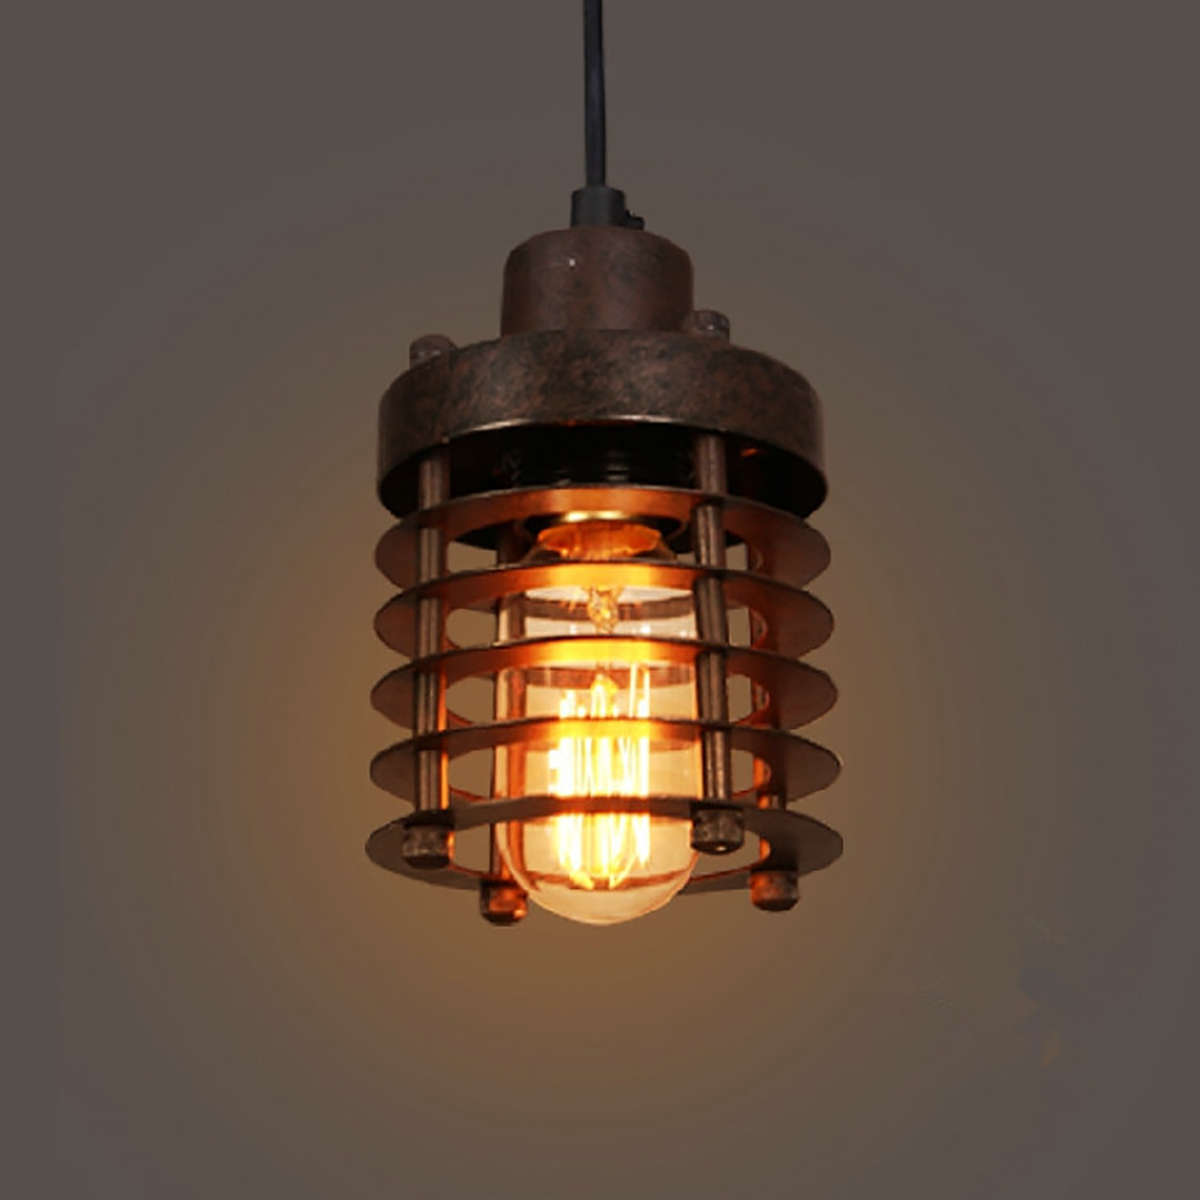 E27-Modern-Iron-Pendant-Light-Ceiling-Lamp-Chandelier-Bedroom-Home-Fixture-Decor-Without-Bulb-1710126-5